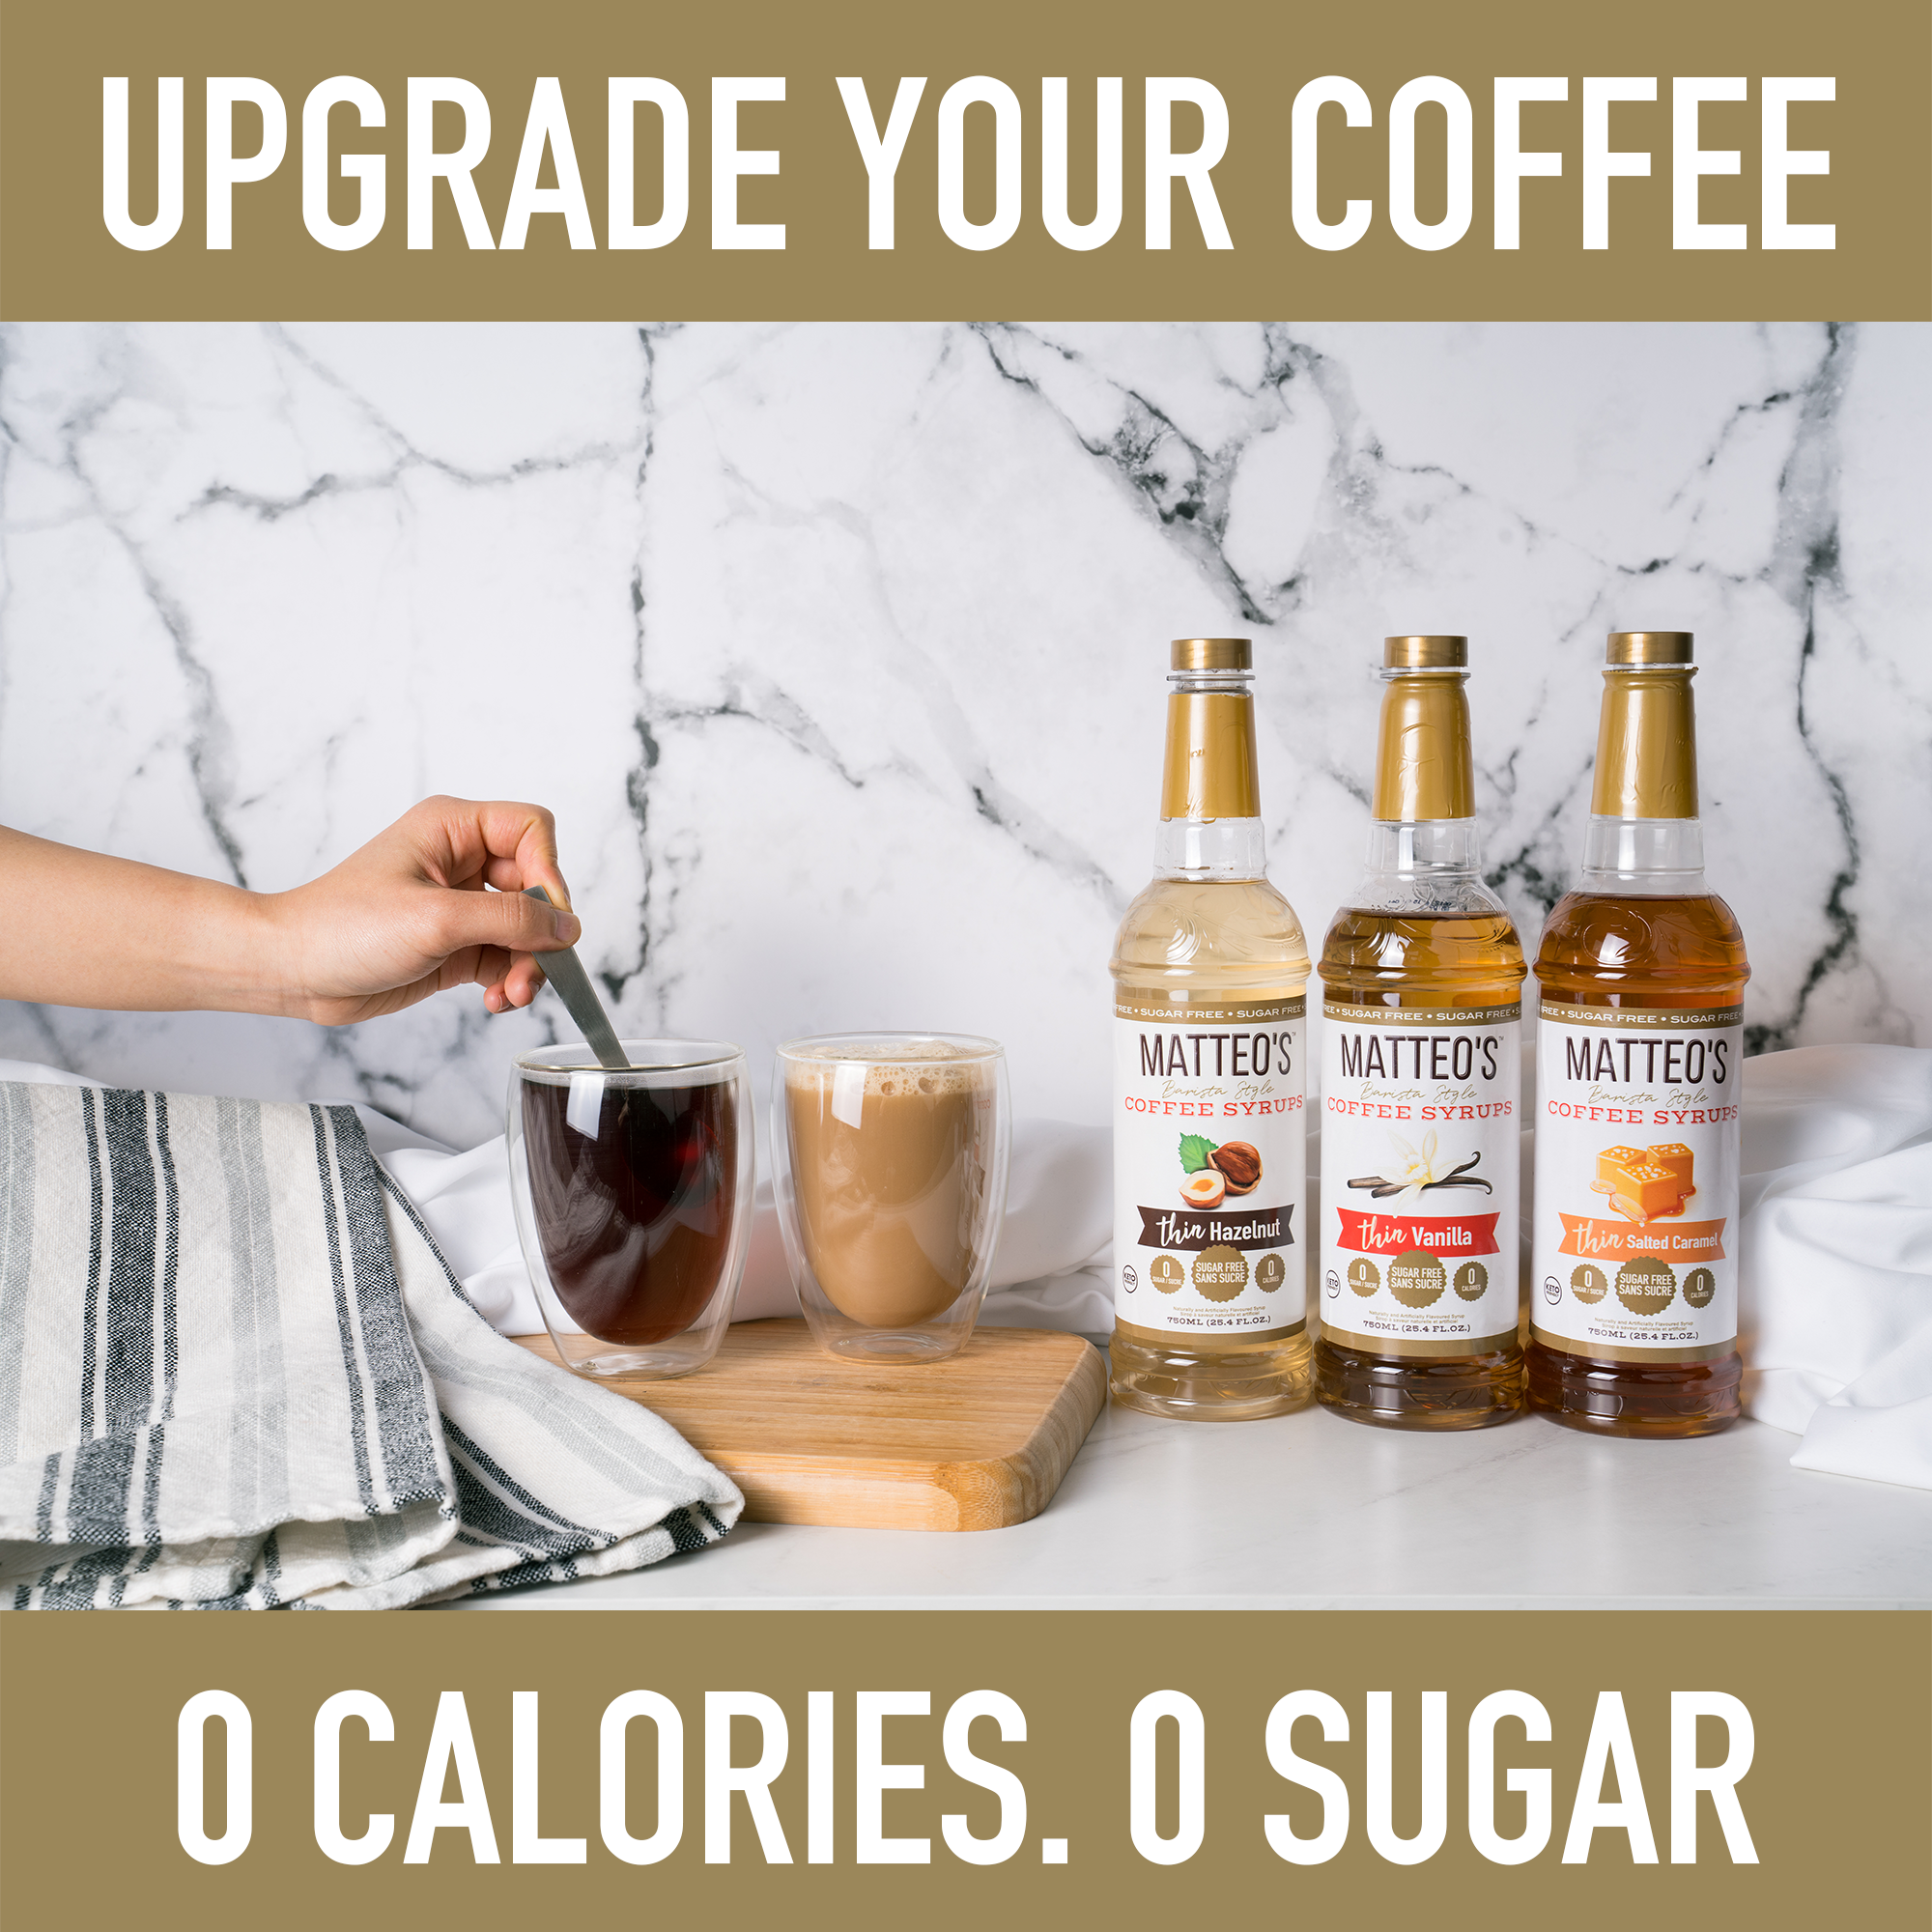 Sugar Free Coffee Syrup, Mint Chocolate Chip - Matteo's Coffee Syrup